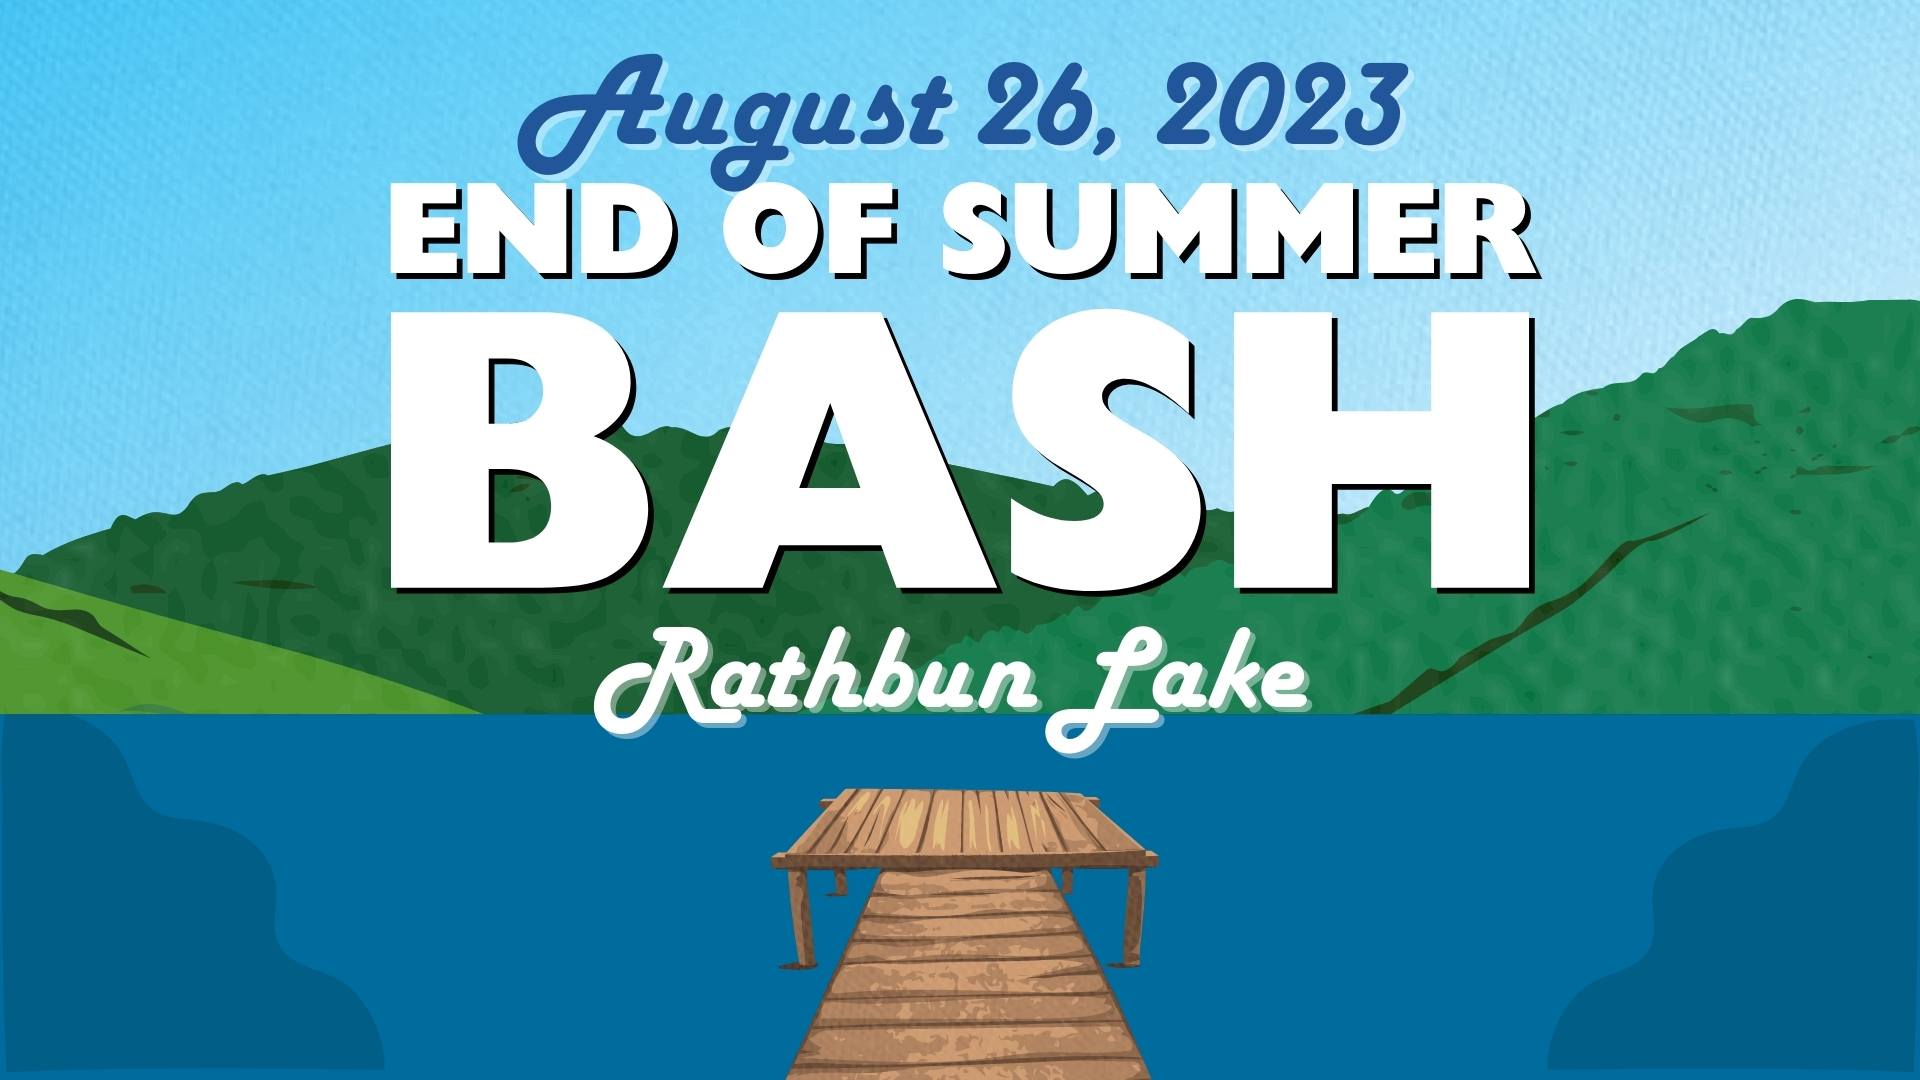 End of Summer Bash event at Rathbun Lake